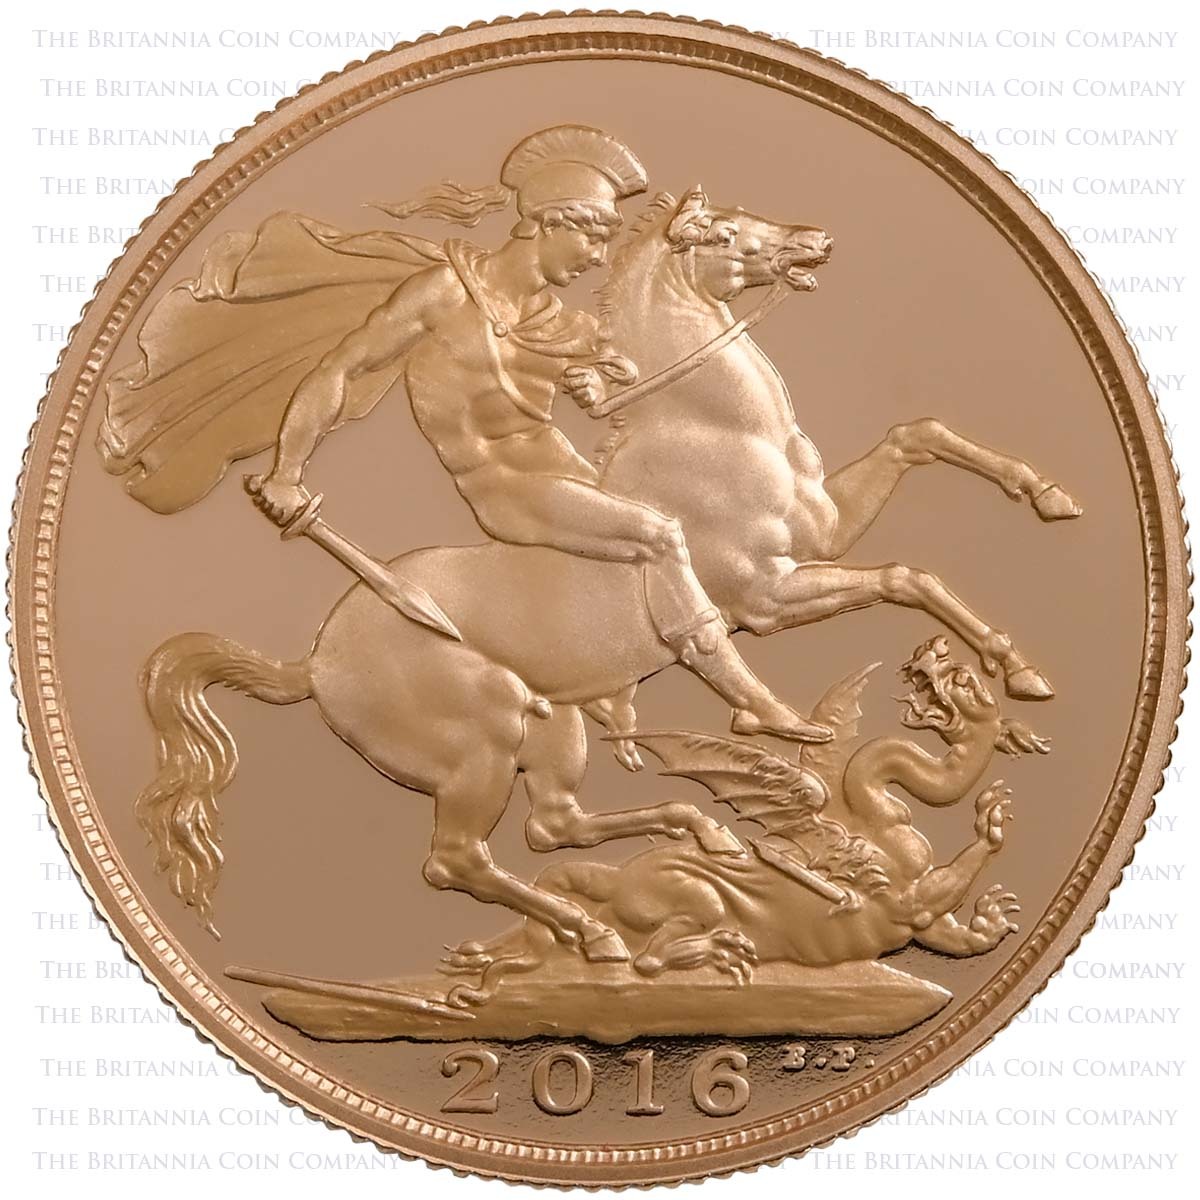 SV316 2016 Elizabeth II 3 Coin Premium Gold Proof Sovereign Set James Butler Portrait Reverse